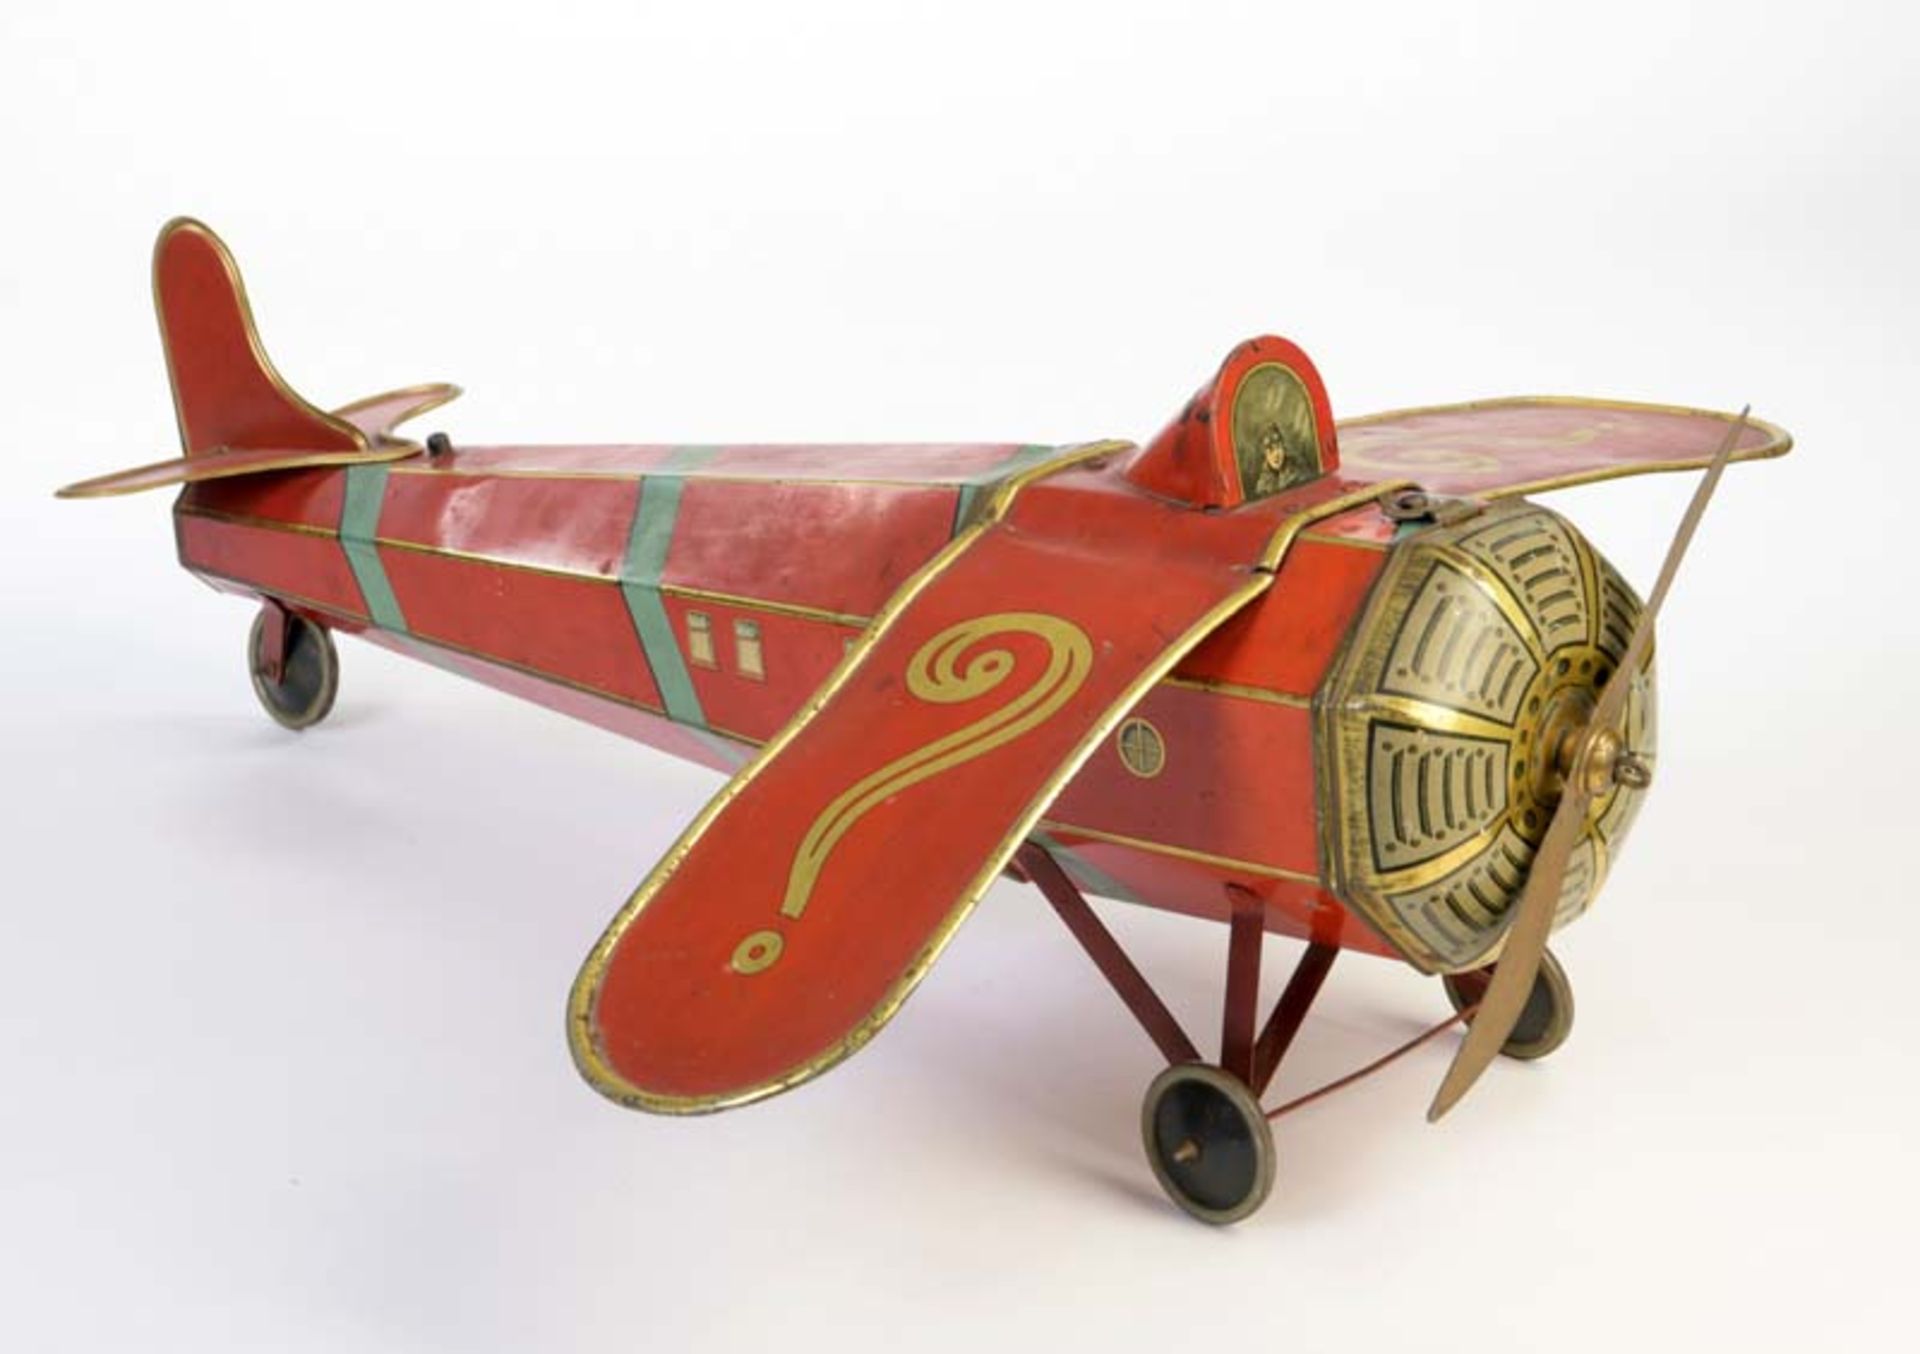 Beekers, Keksdosenflugzeug, 78 cm, Blech, mit Originalpropeller, Z 2+Beekers, Bisquit Box Plane,